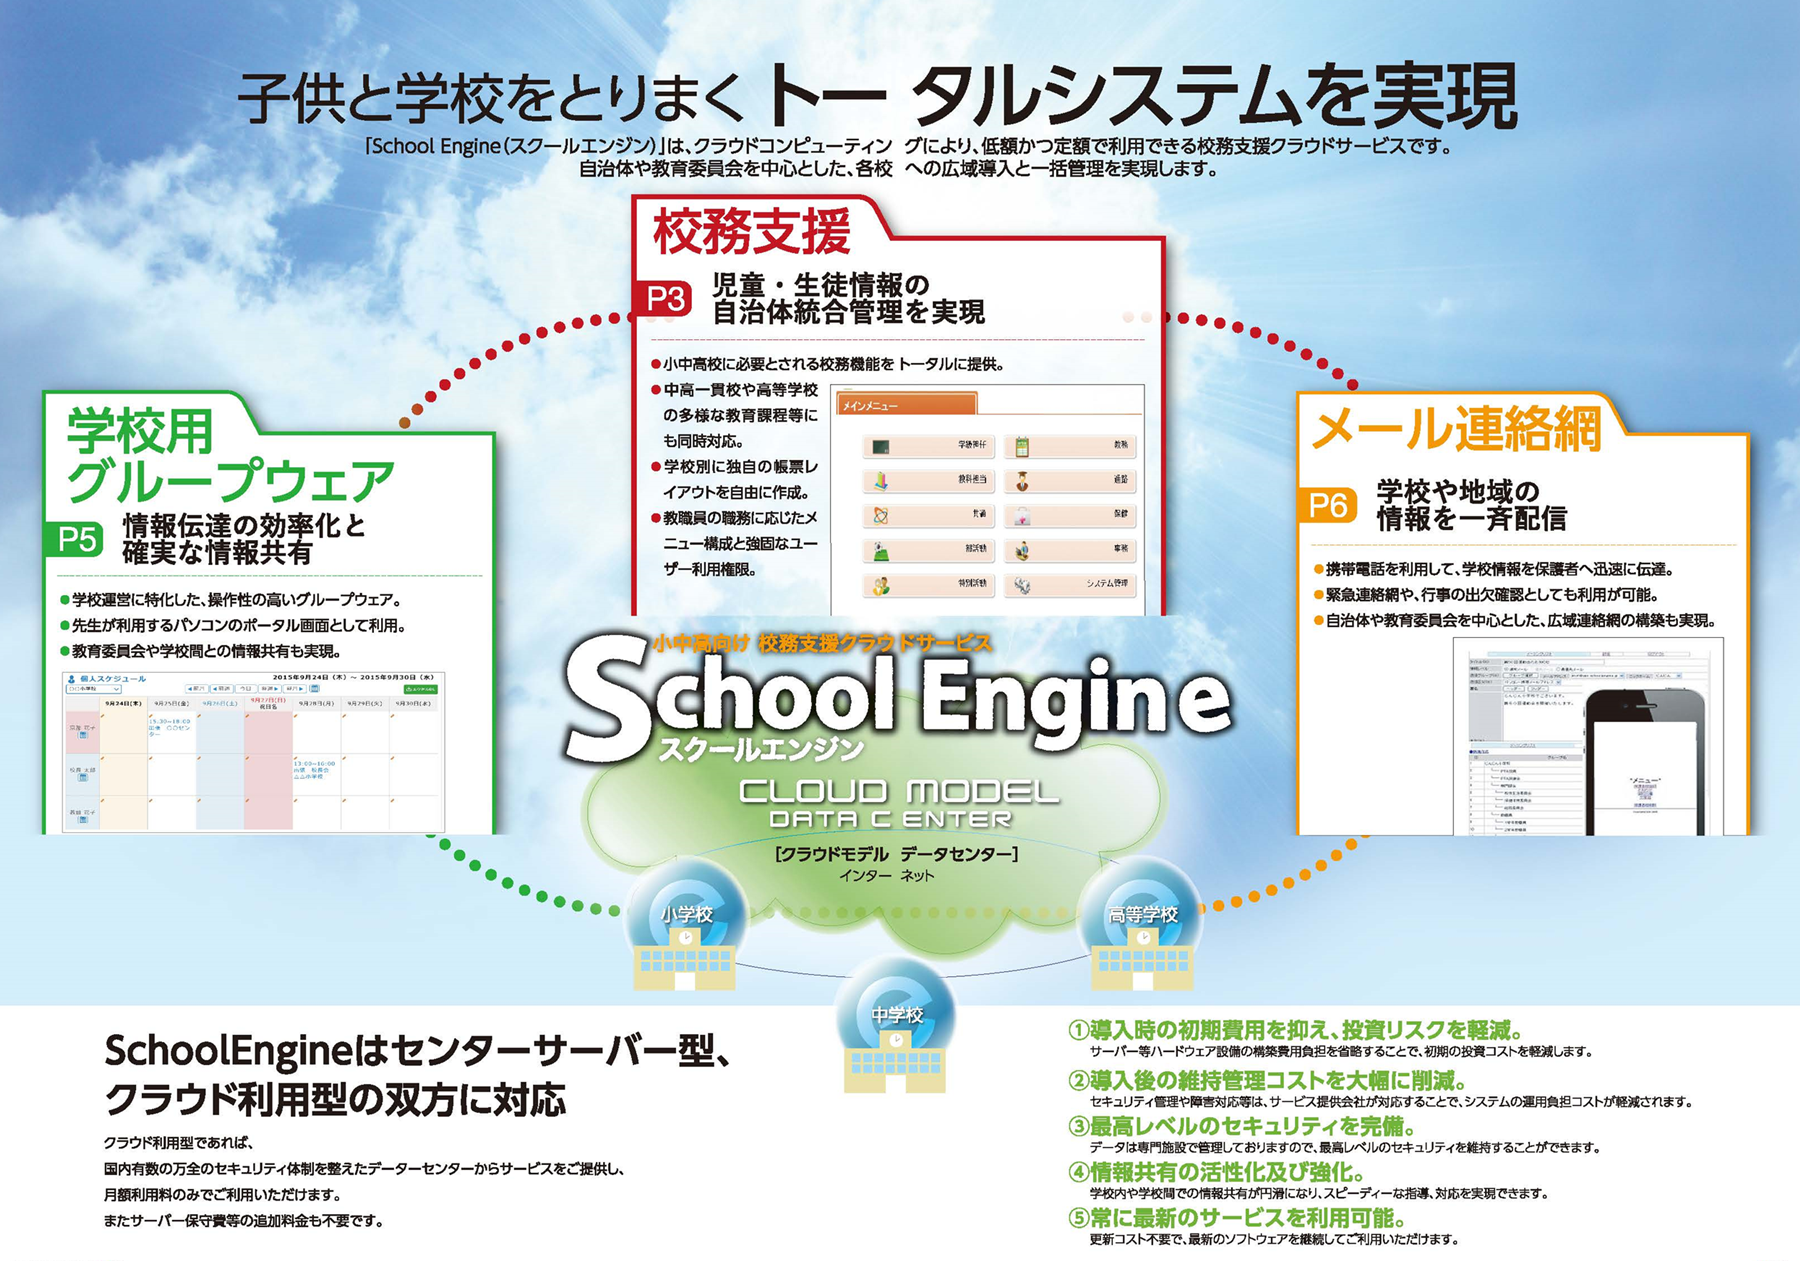 School Engine